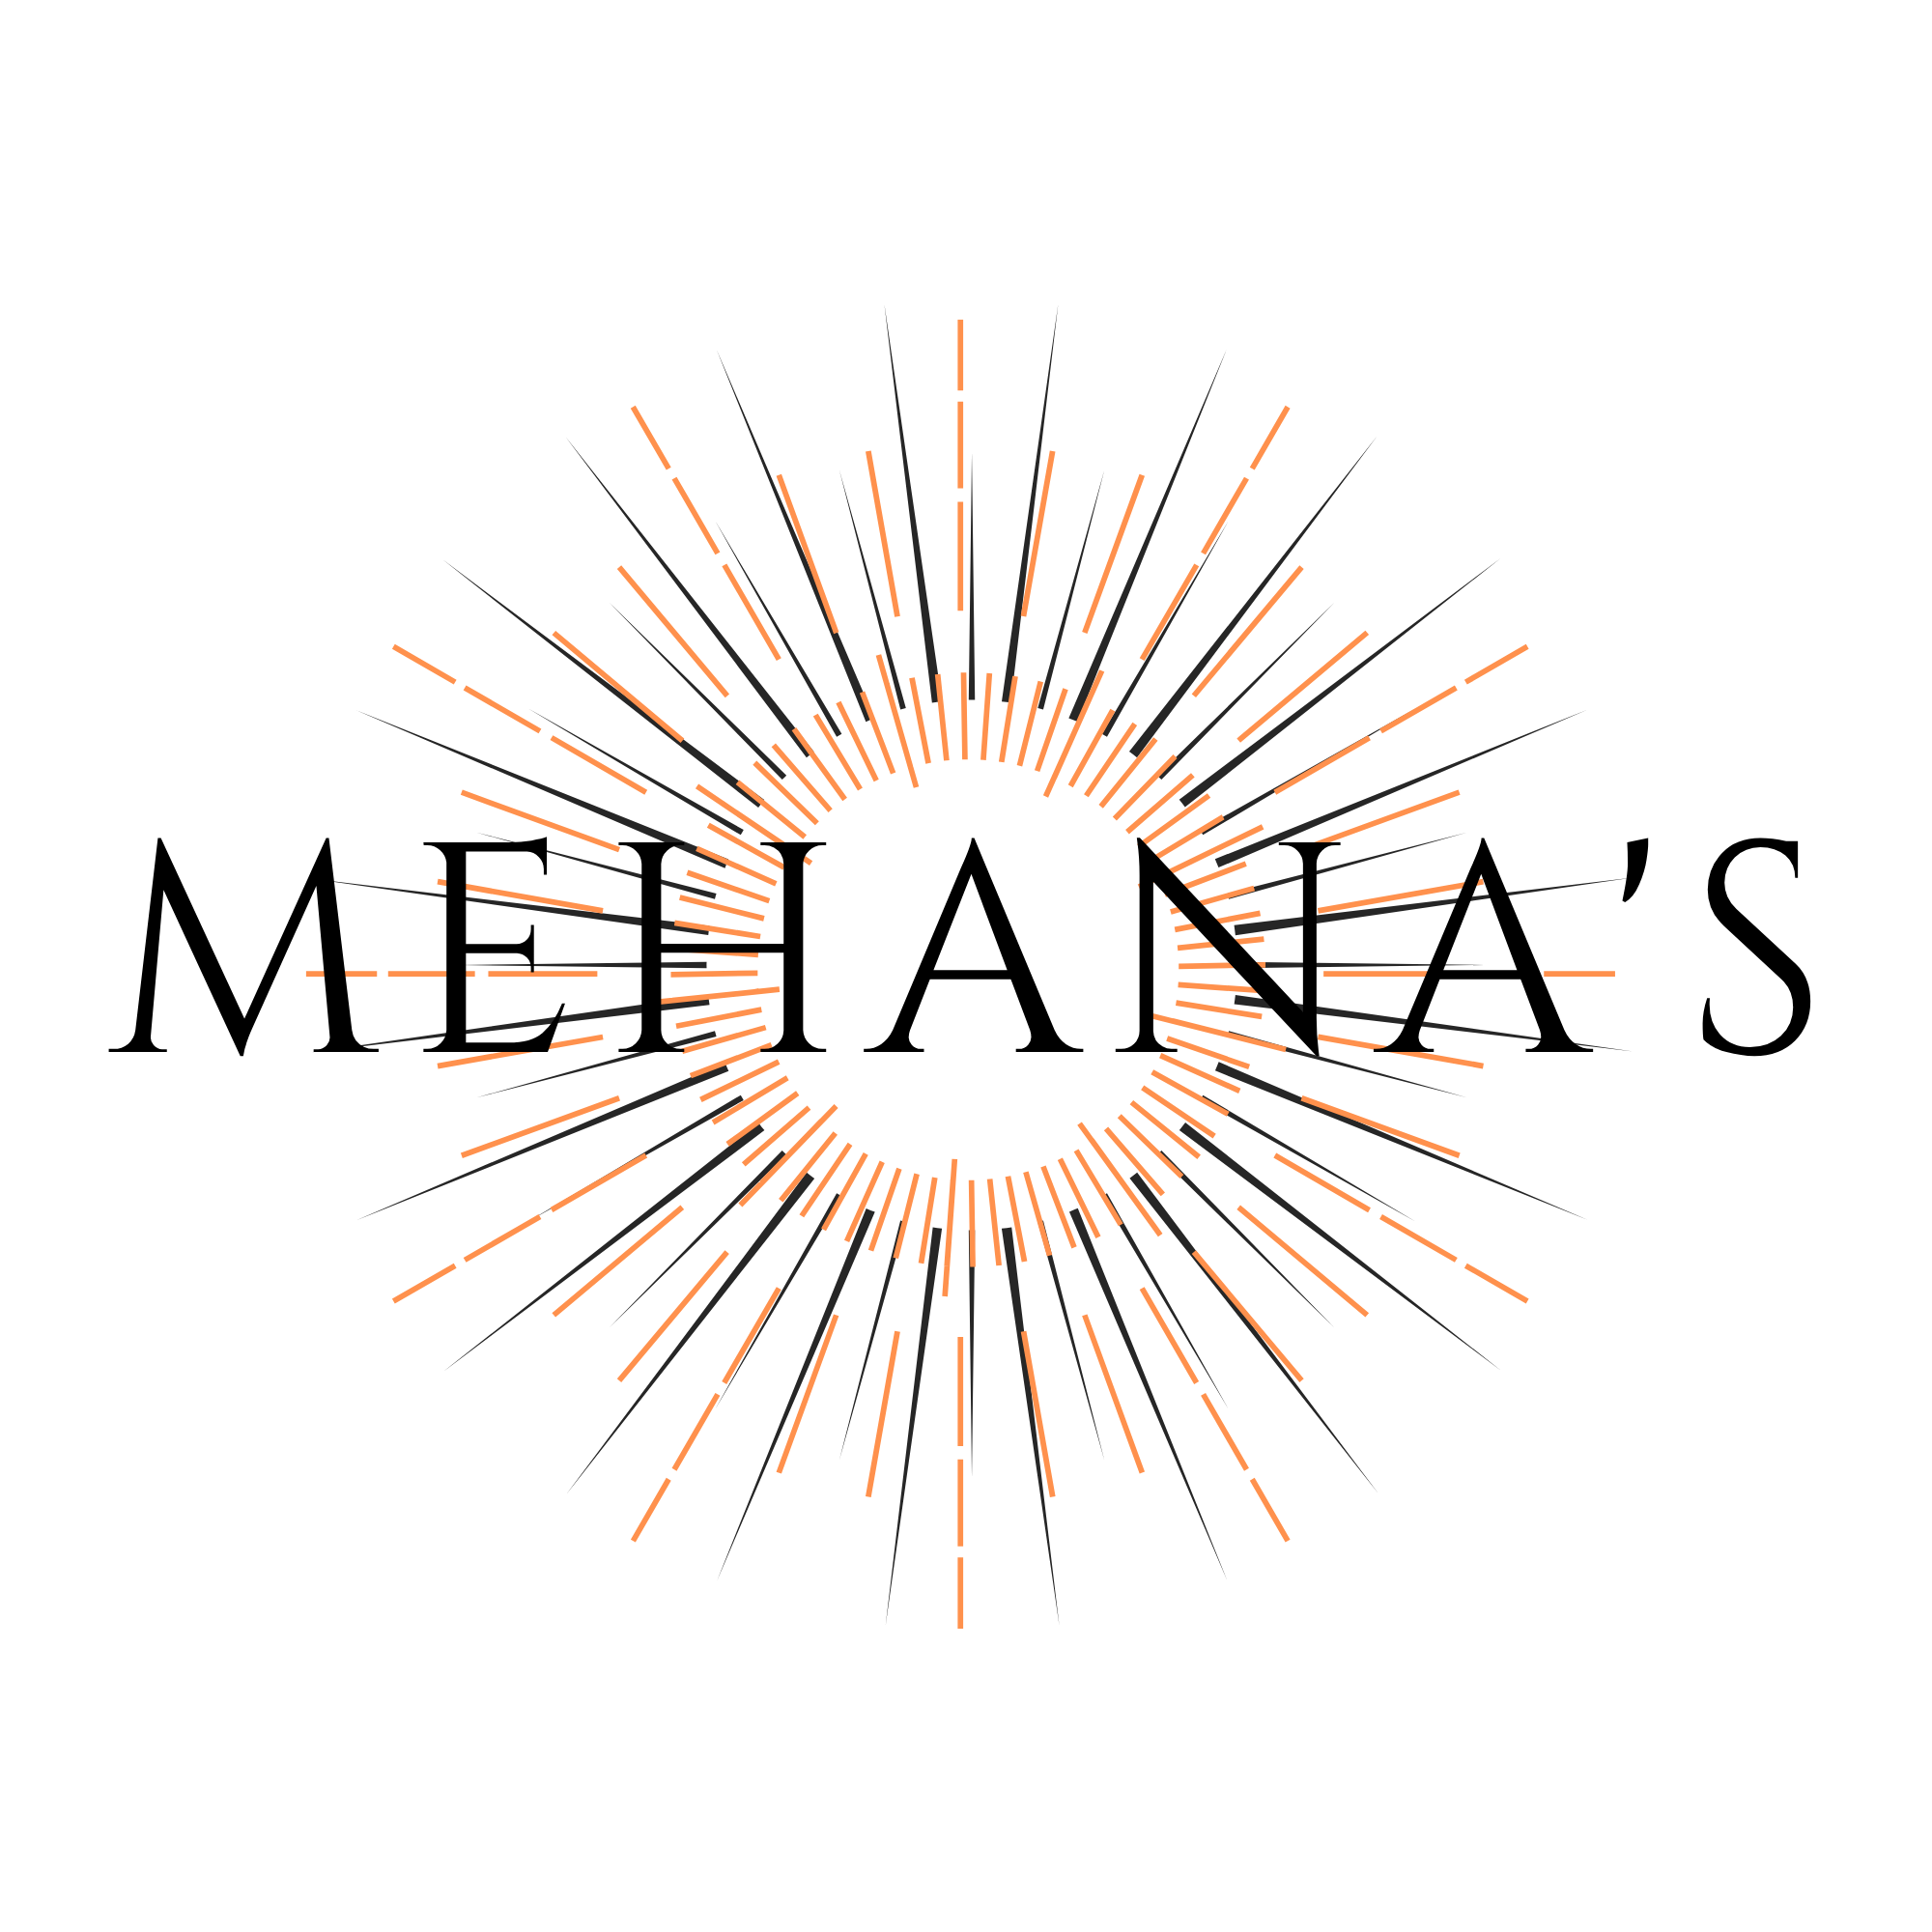 Mehana's Shop